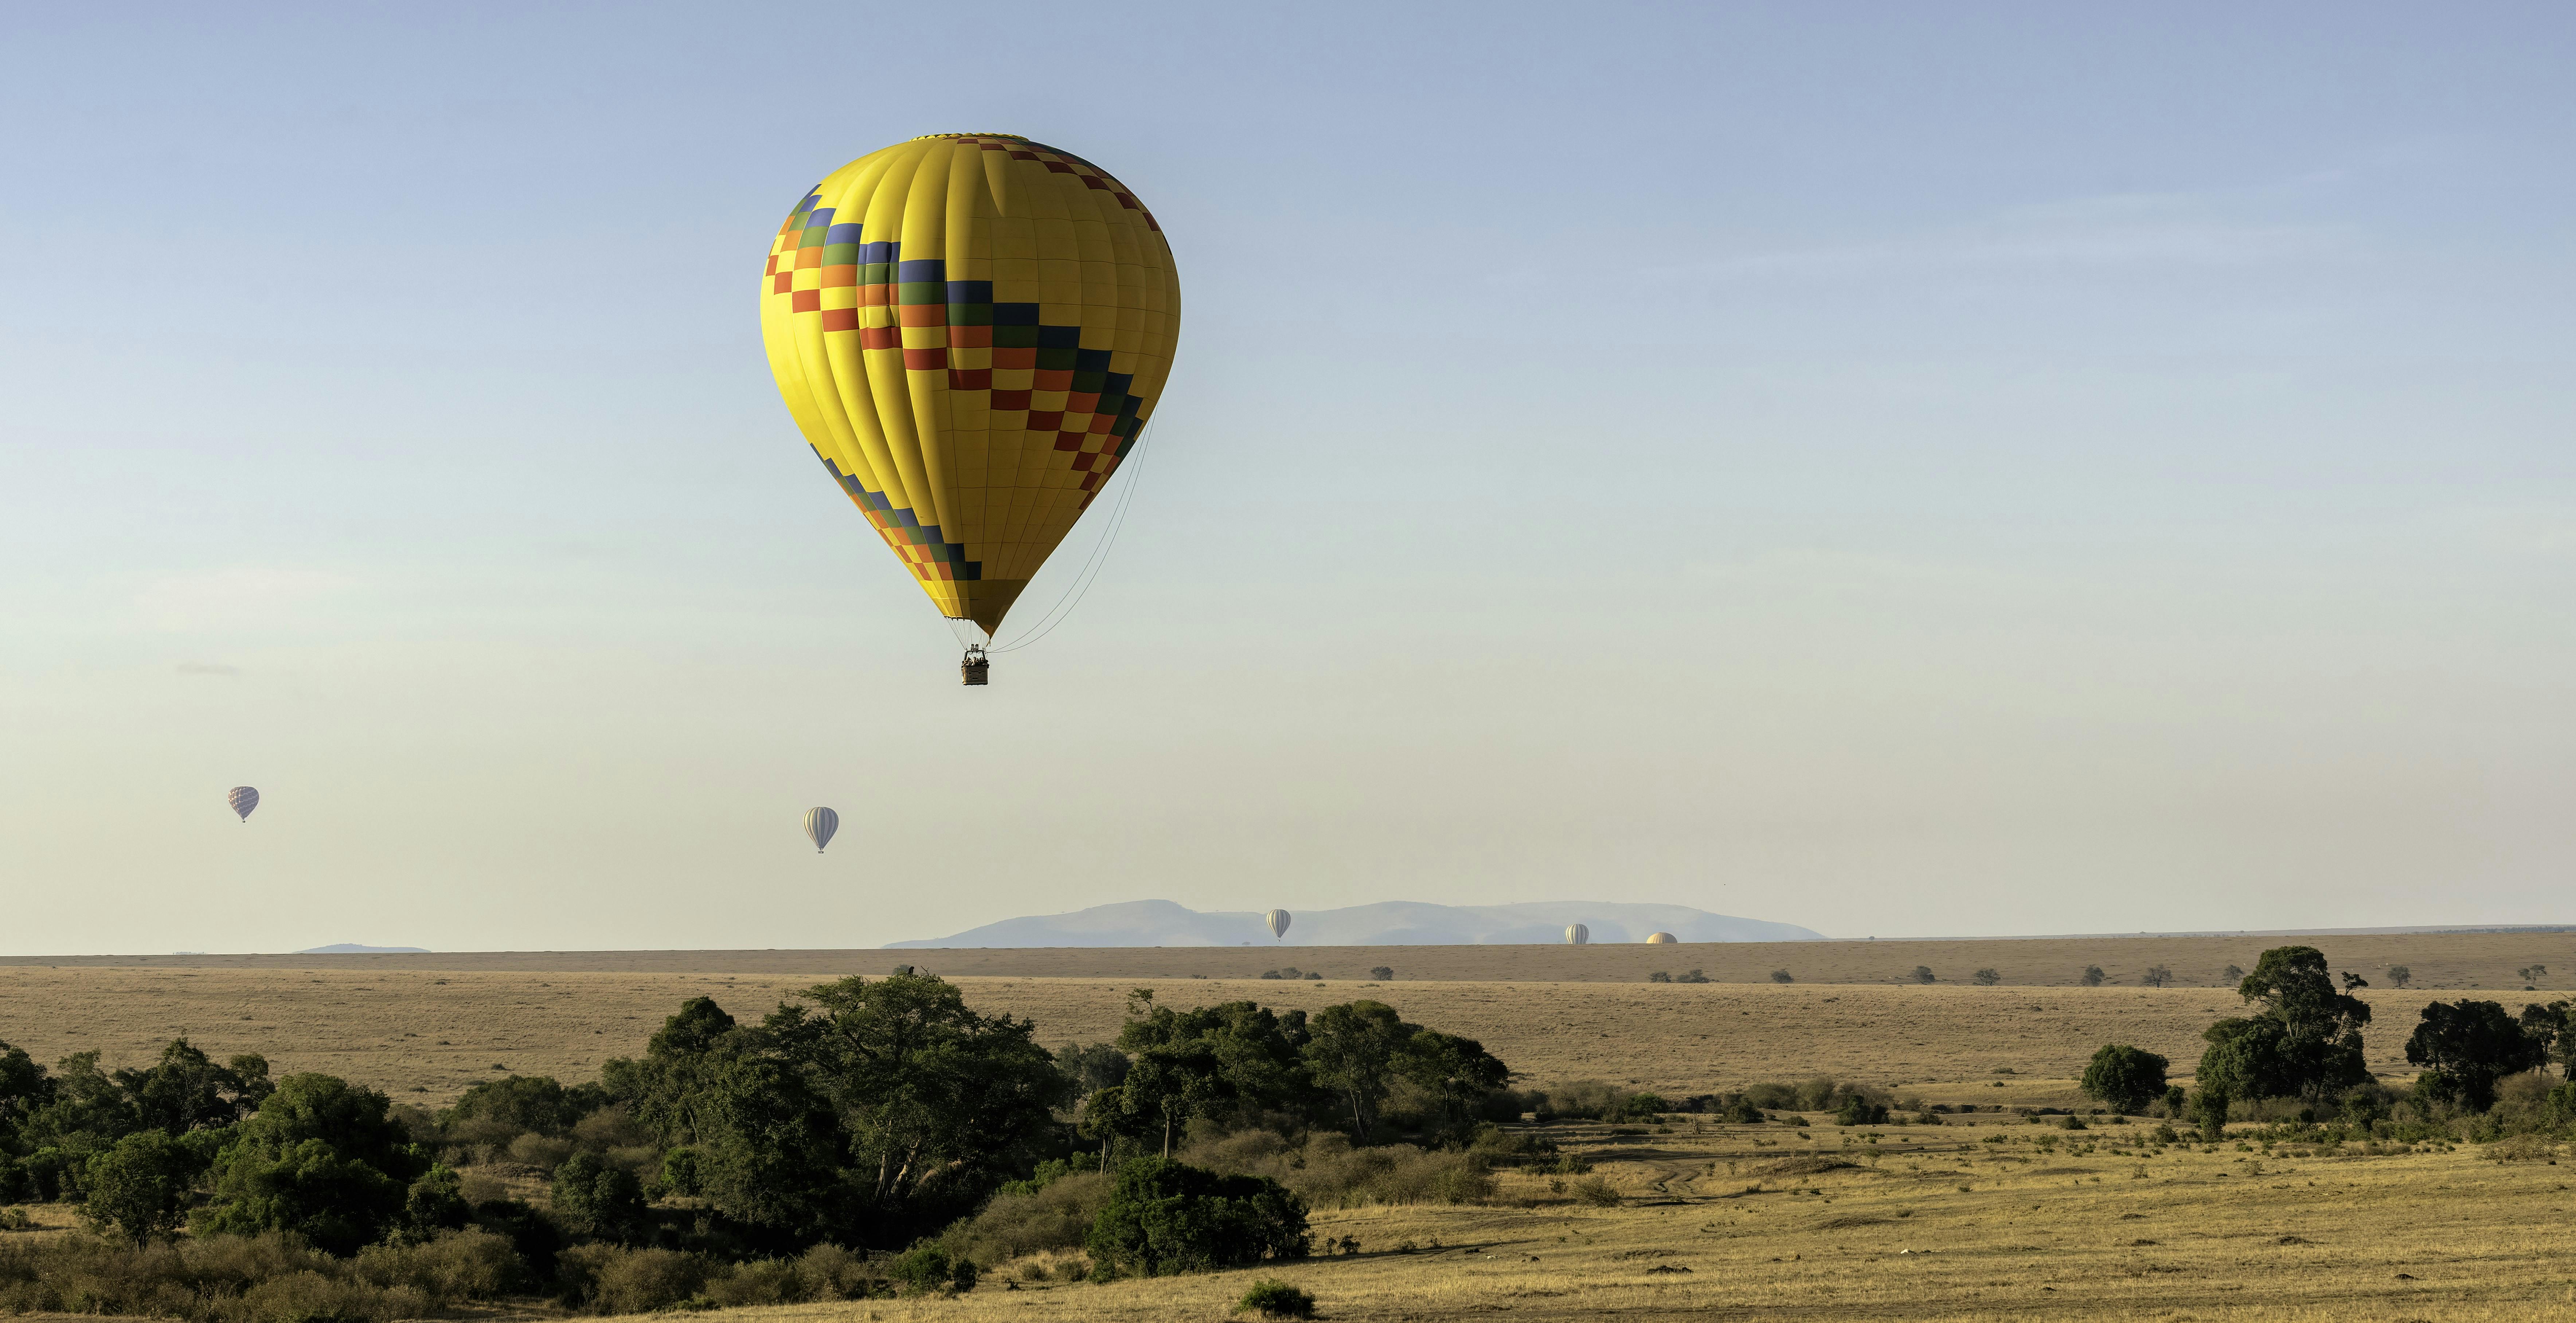 Safari en montgolfière Maasai Mara